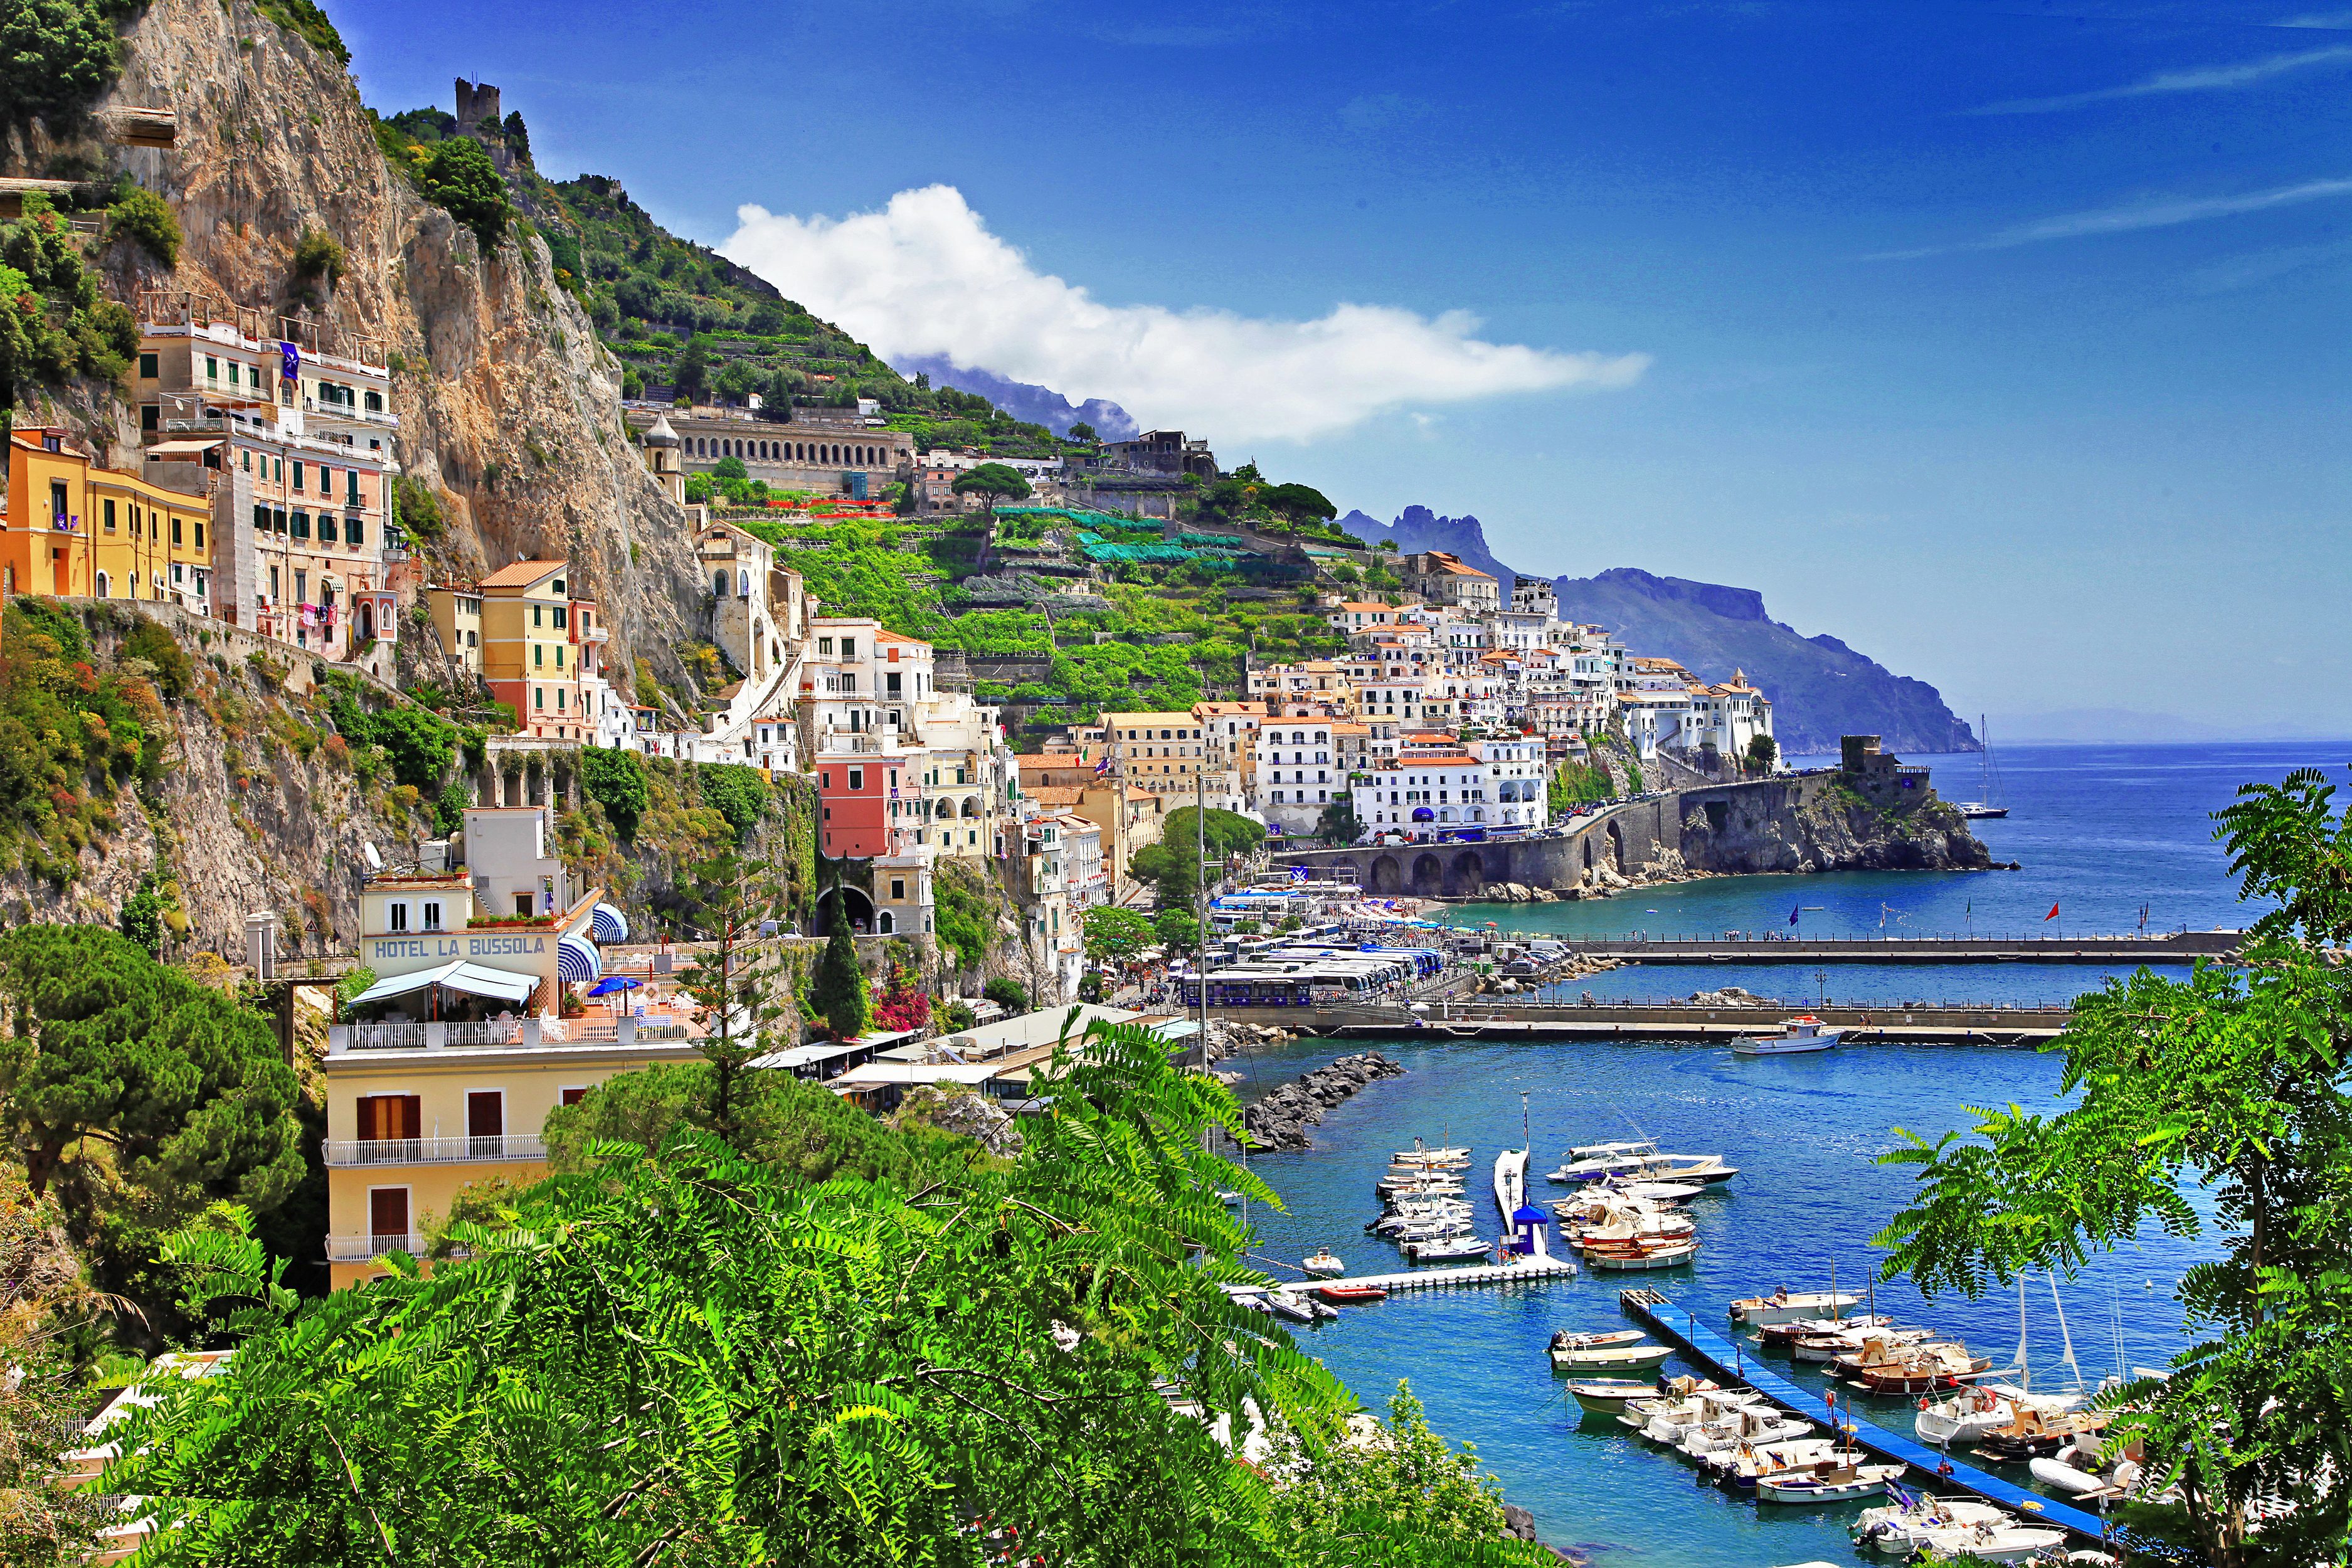 Amalfi coast. Побережье Амальфи Италия. Италия Амальфитанское побережье Позитано. Амальфи Позитано Италия. Амальфийское побережье (Amalfi Coast), Италия.